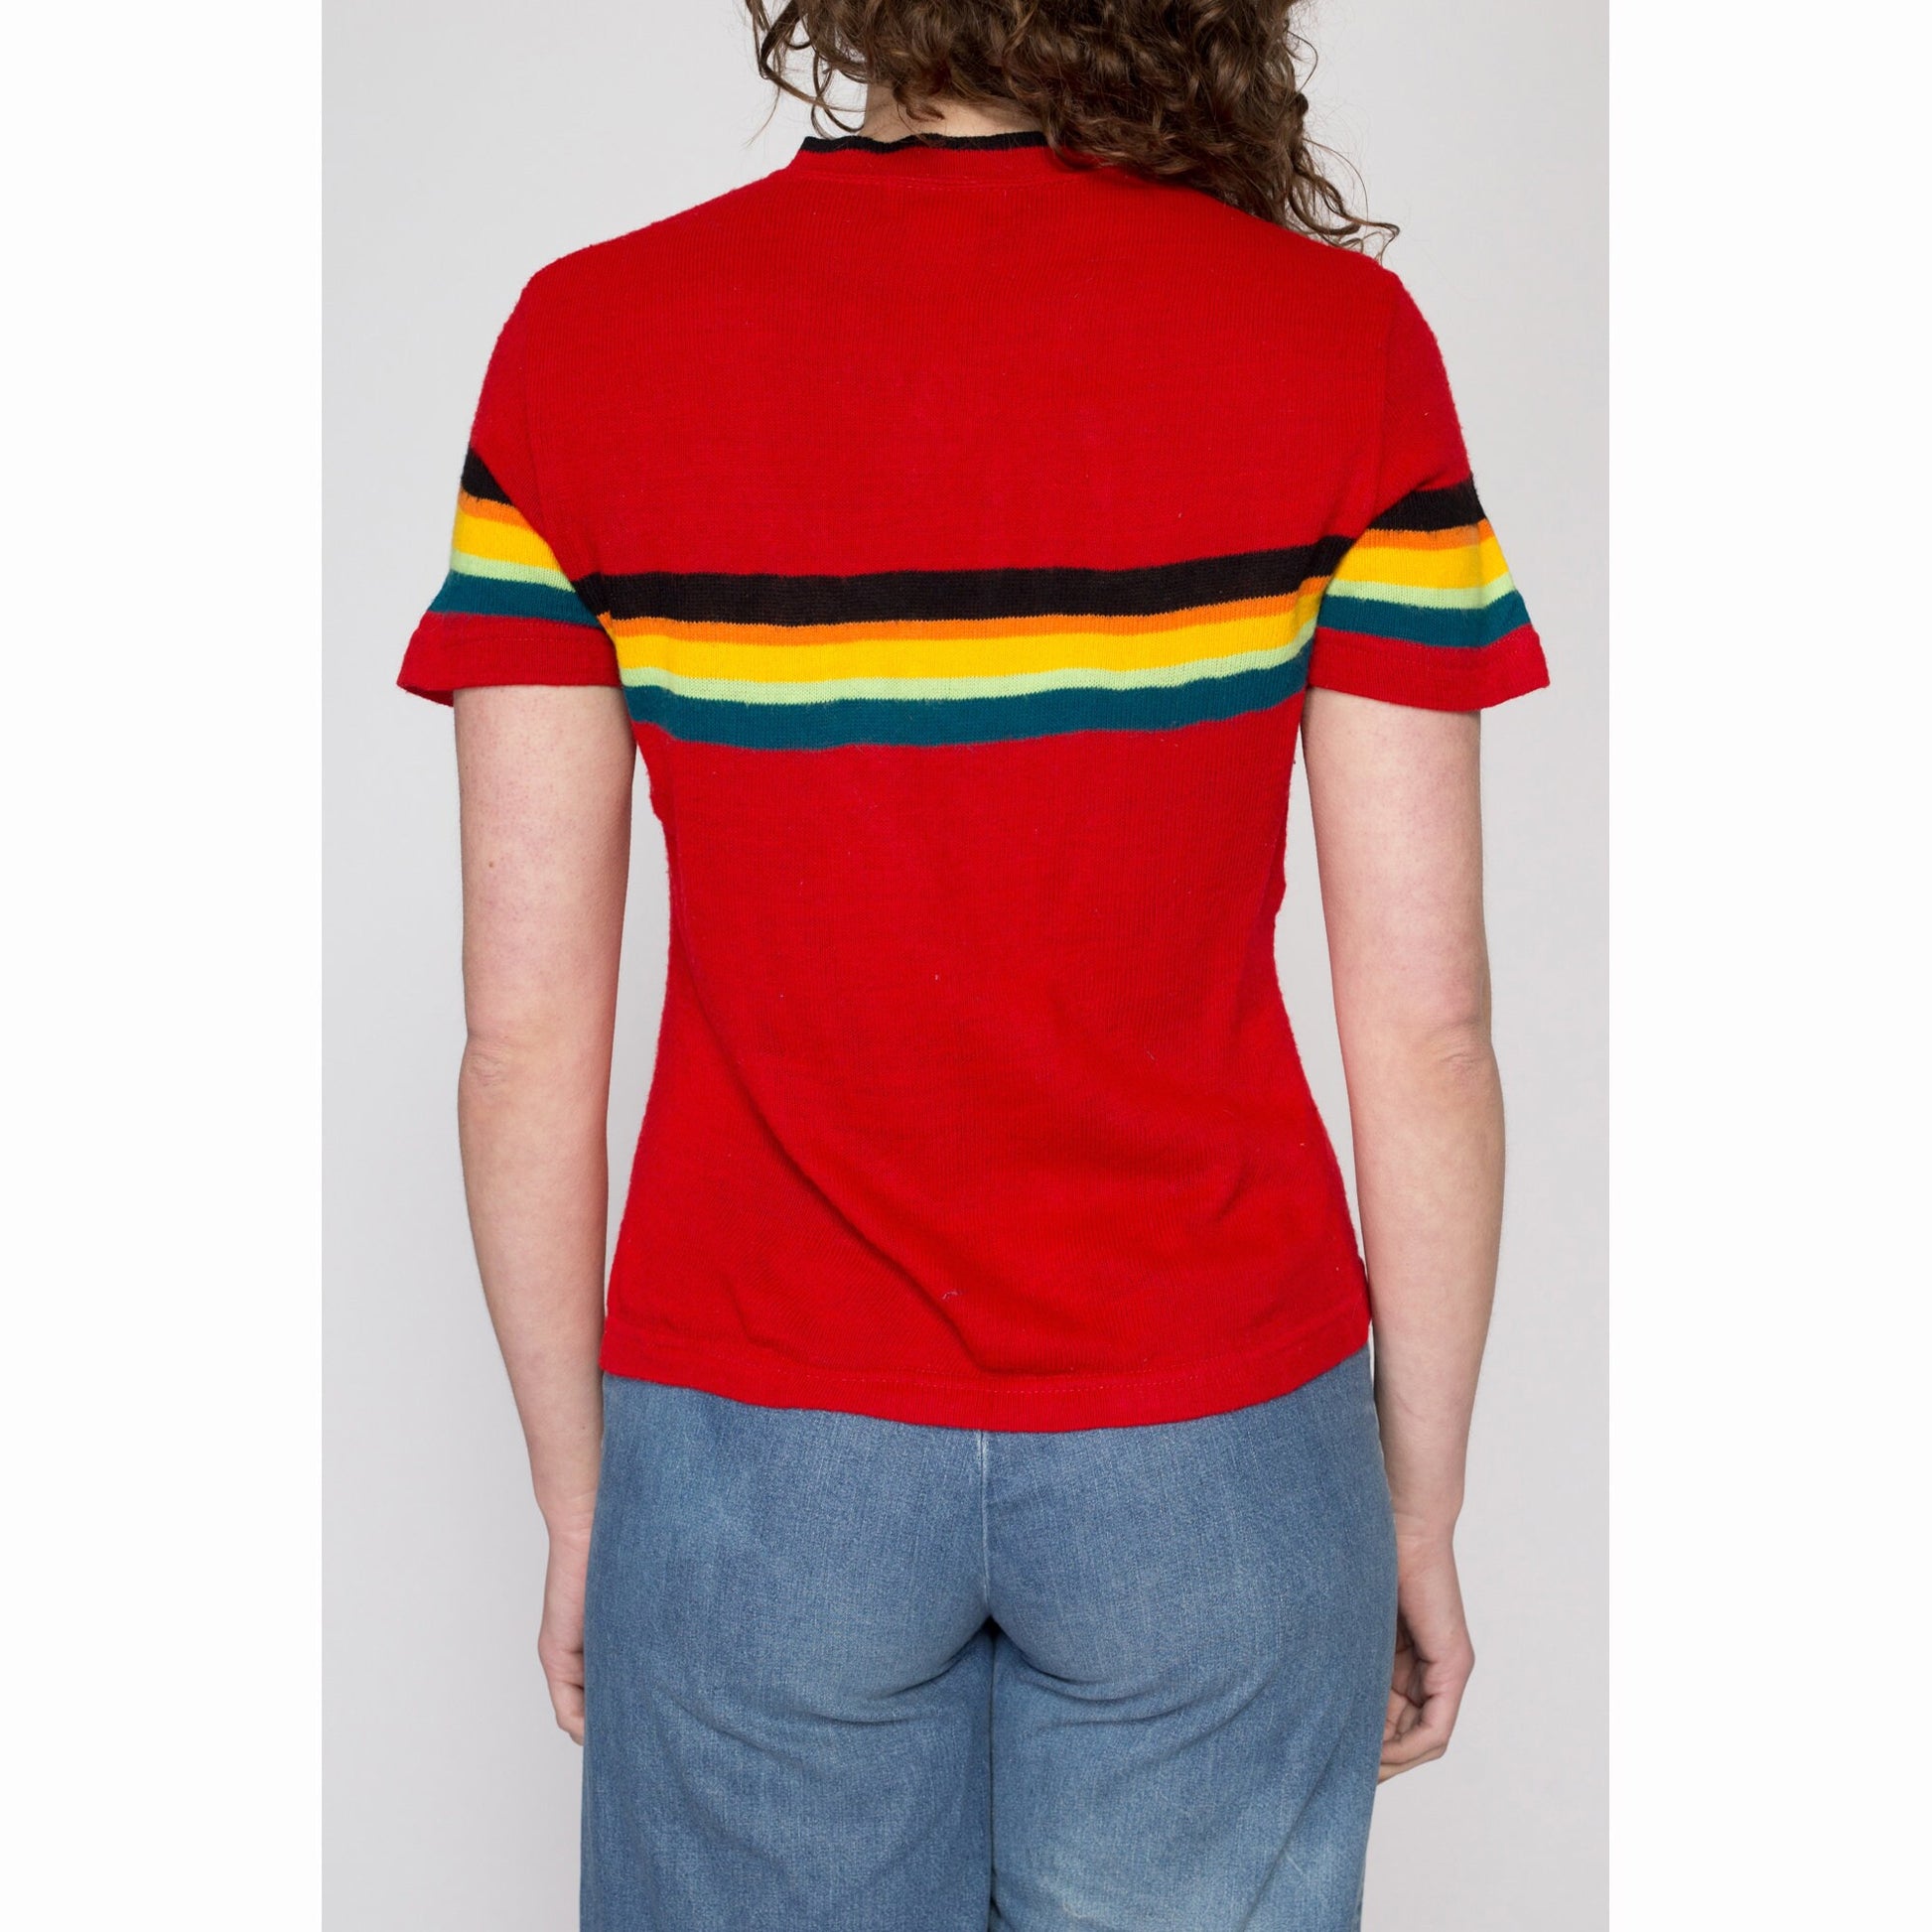 Medium 90s Does 70s Red Striped Knit Top | Vintage Boho Short Sleeve V Neck Shirt